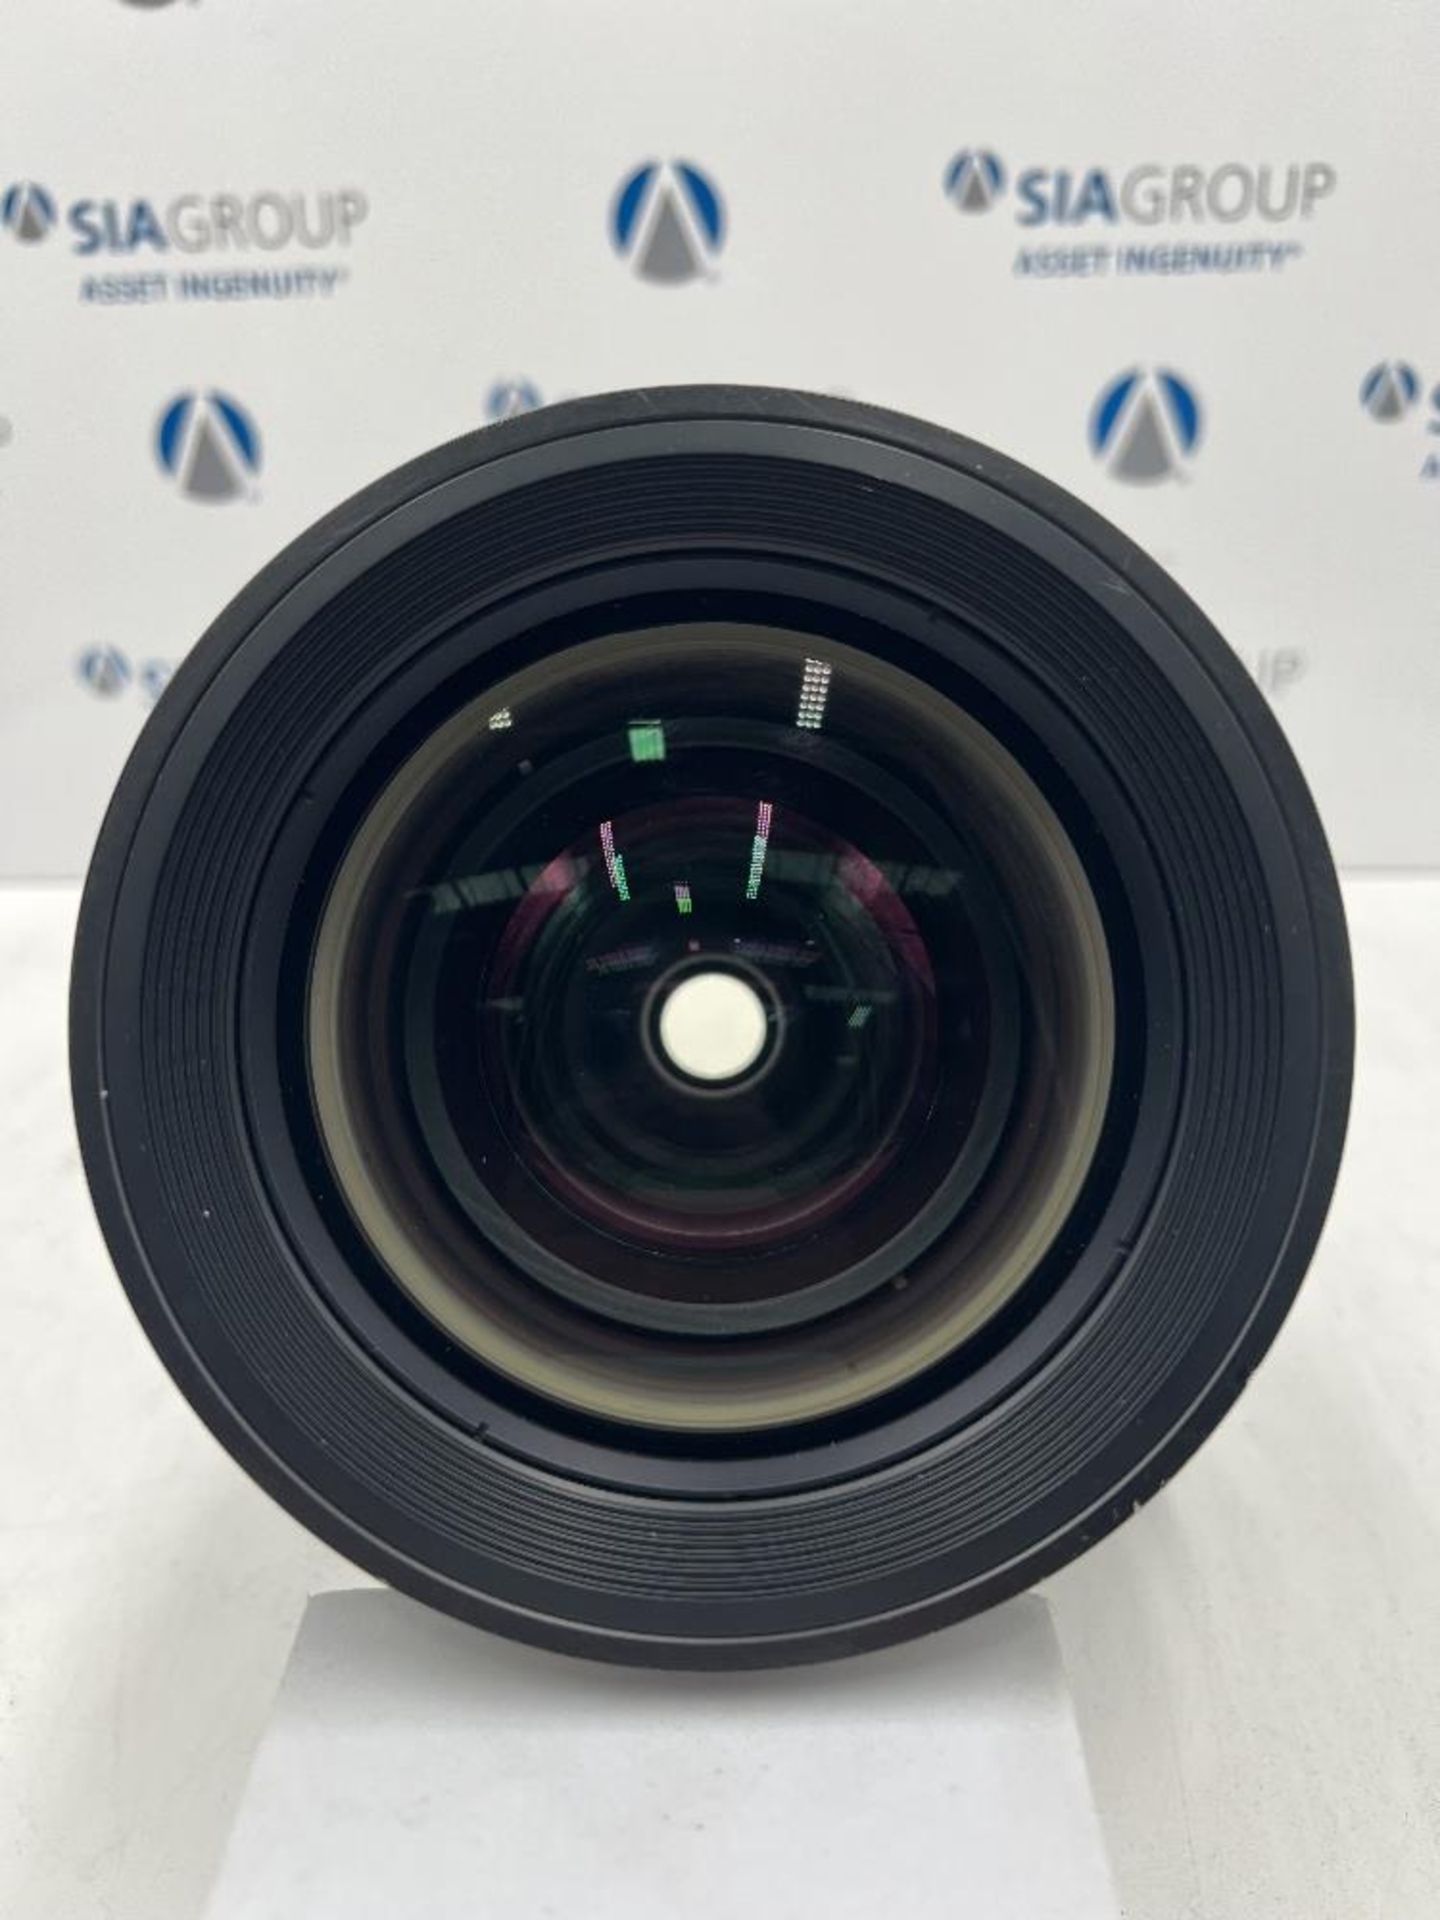 Panasonic ET-D75LE20 1.7-2.4 Zoom Lens With Carrier Case - Image 6 of 9